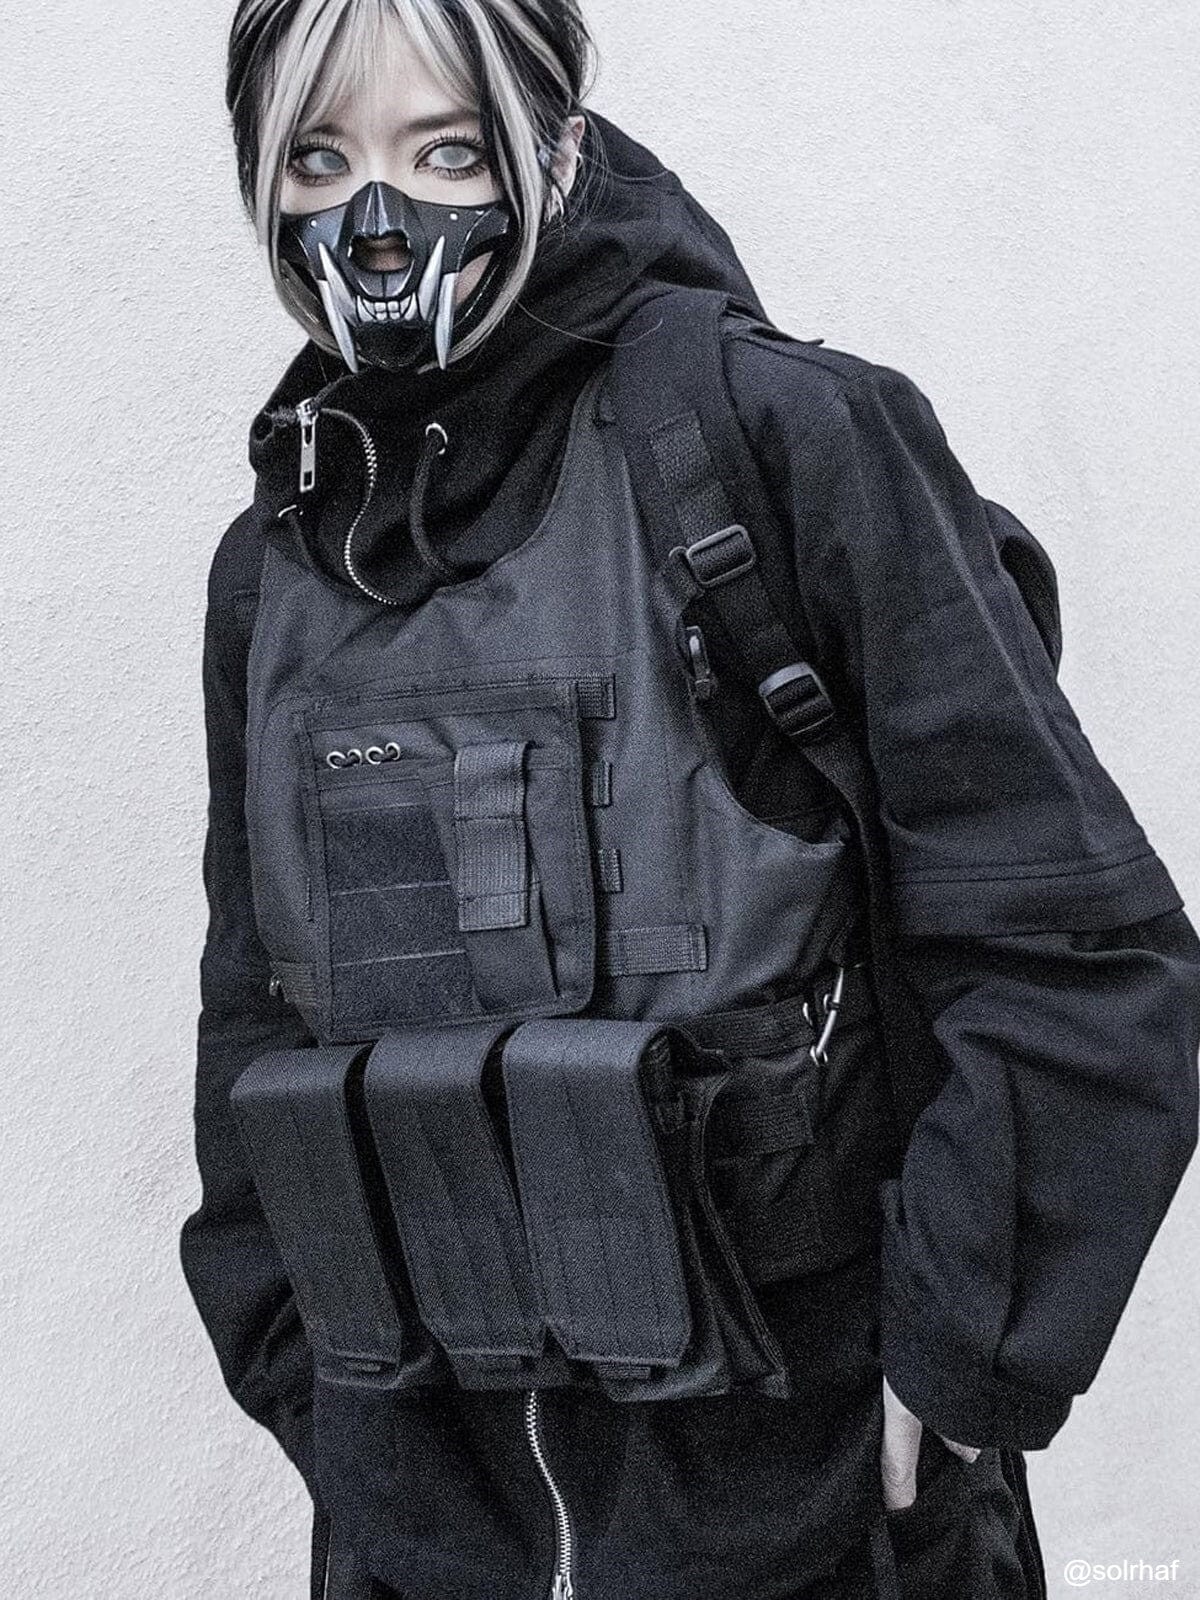 NEV "Tactical Camouflage" Vest